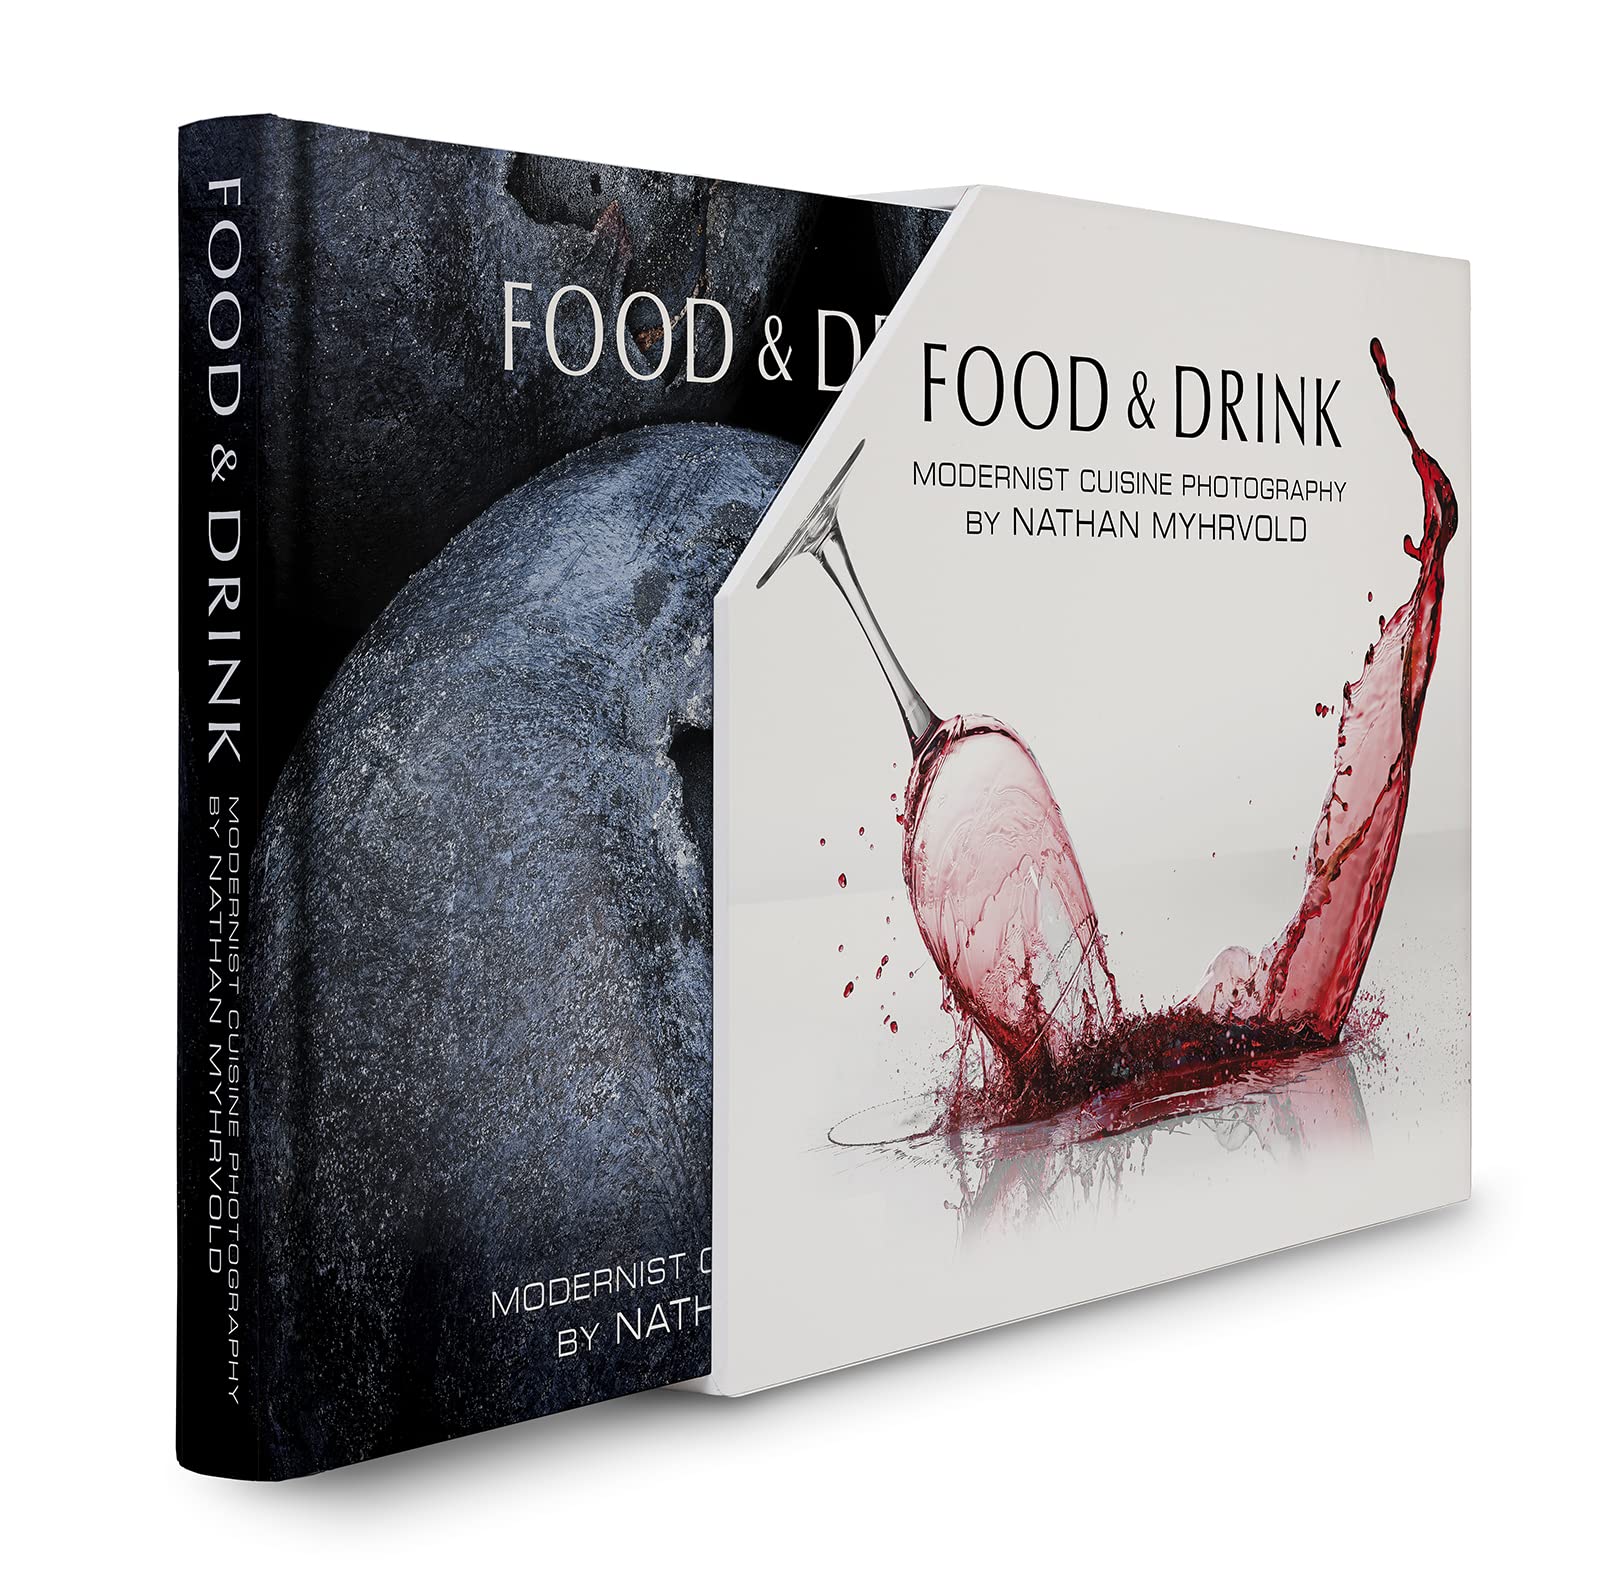 Food & Drink: Modernist Cuisine Photography